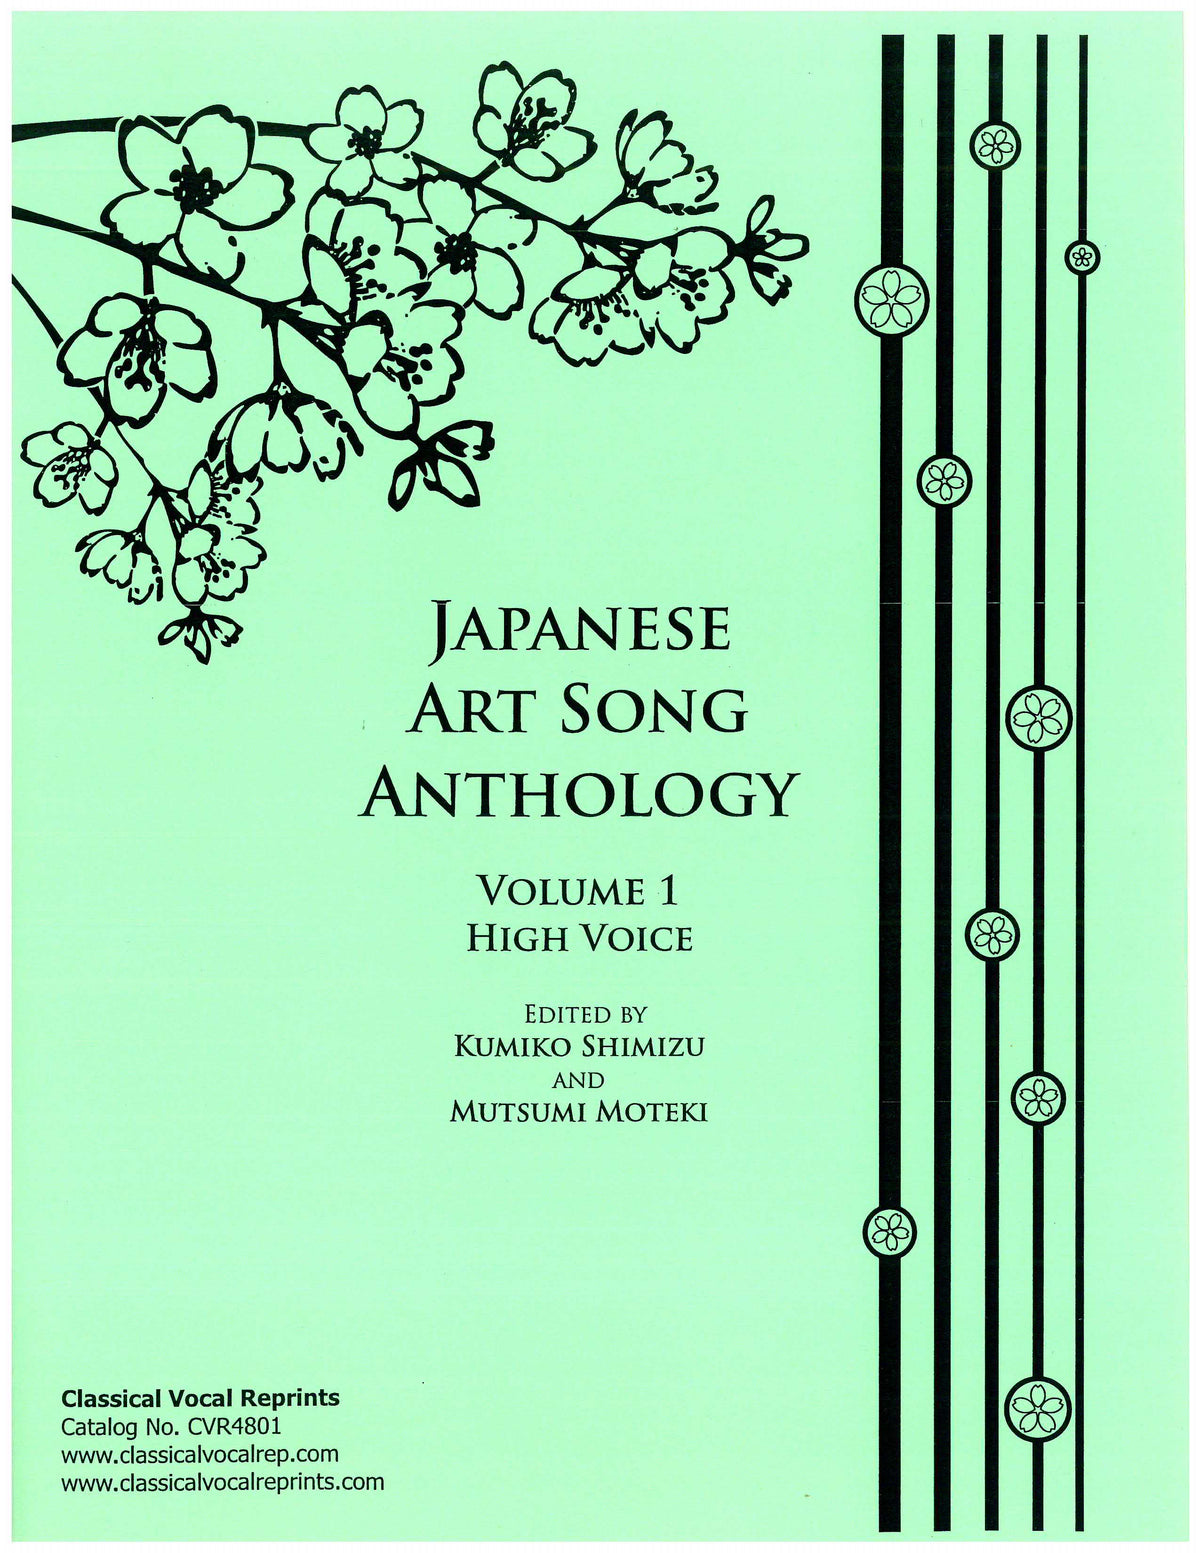 Japanese Art Song Anthology, Volume 1 High Voice